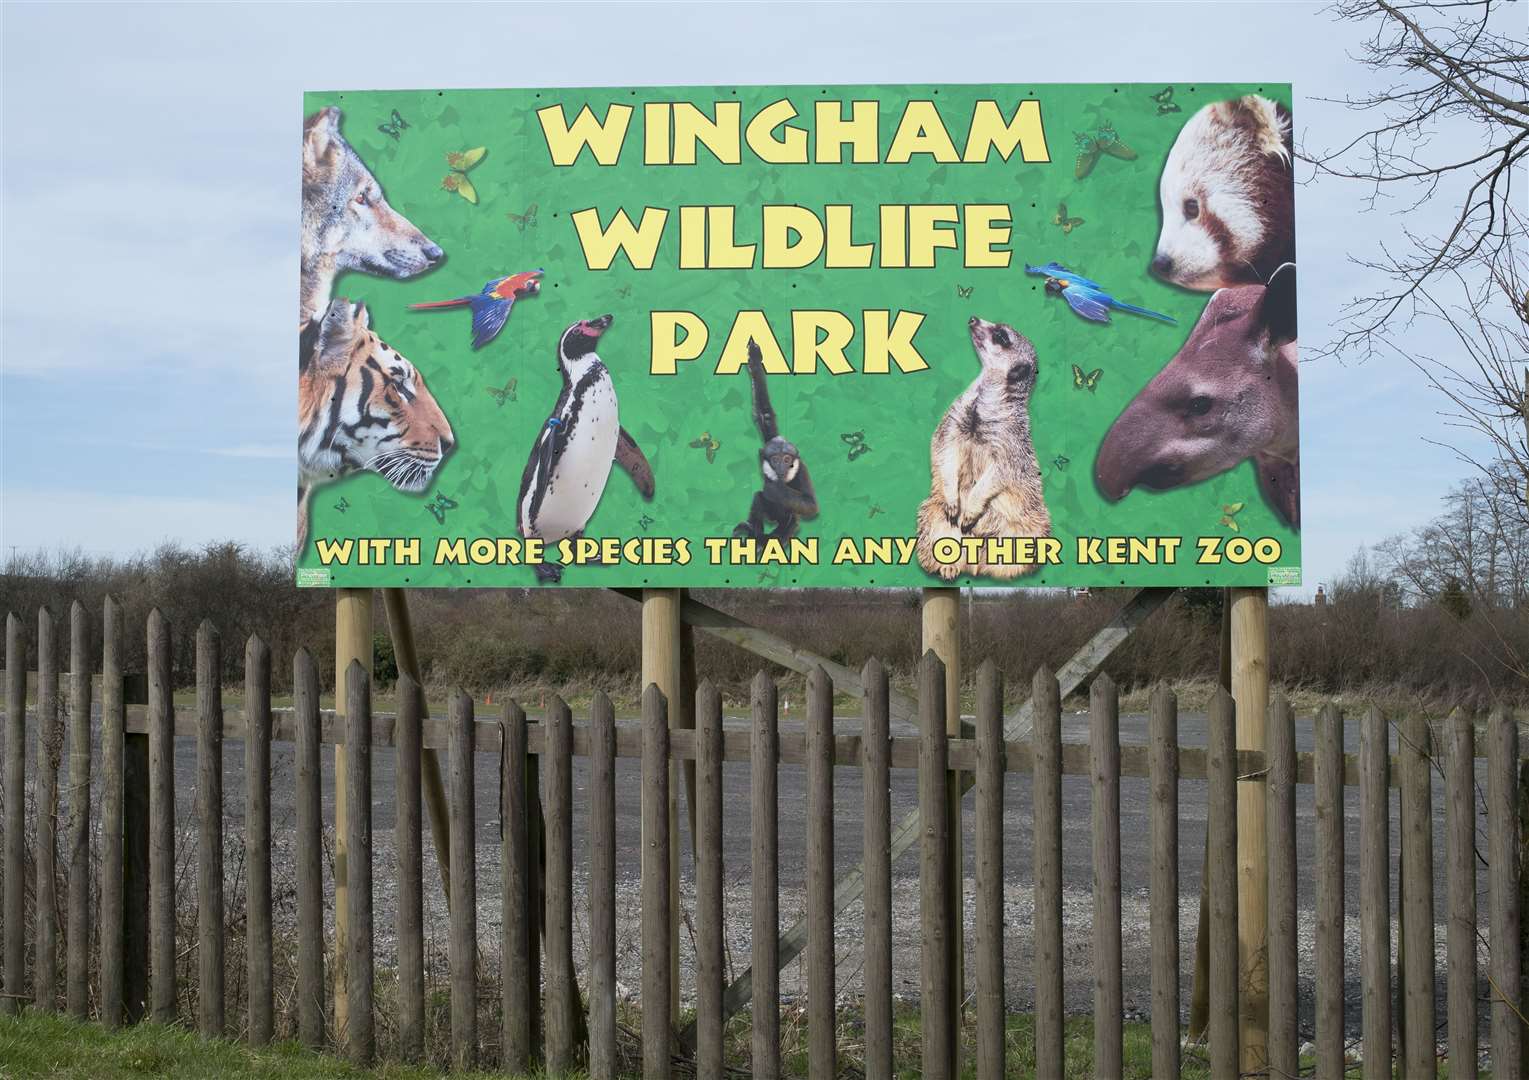 Wingham Wildlife Park. Library image